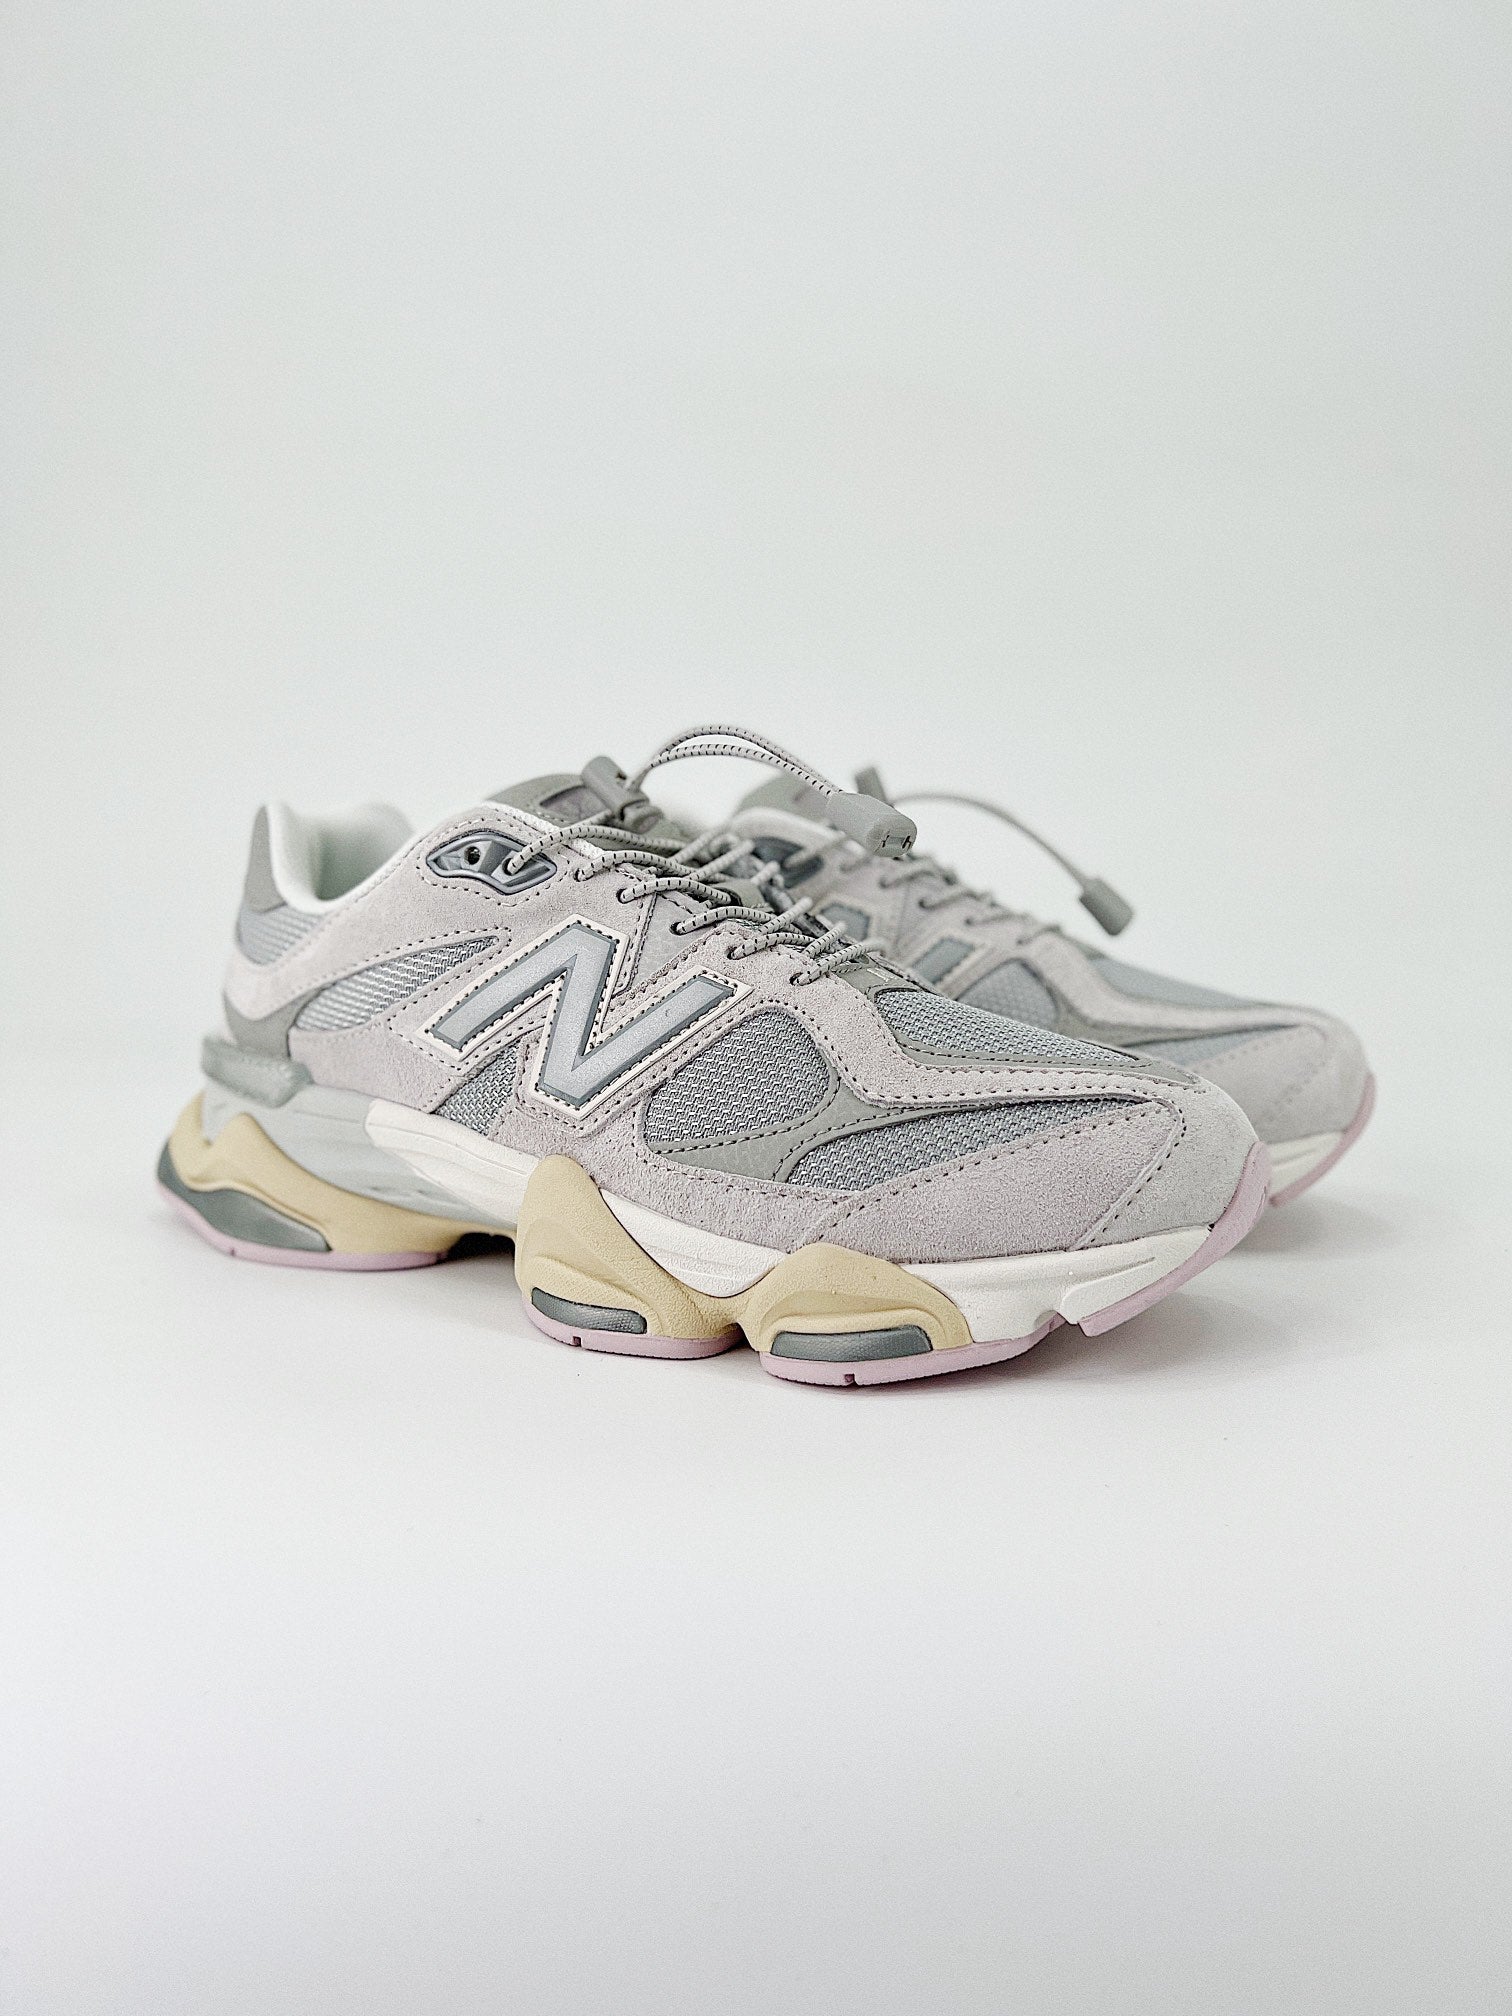 New Balance NB 9060 White/Pink